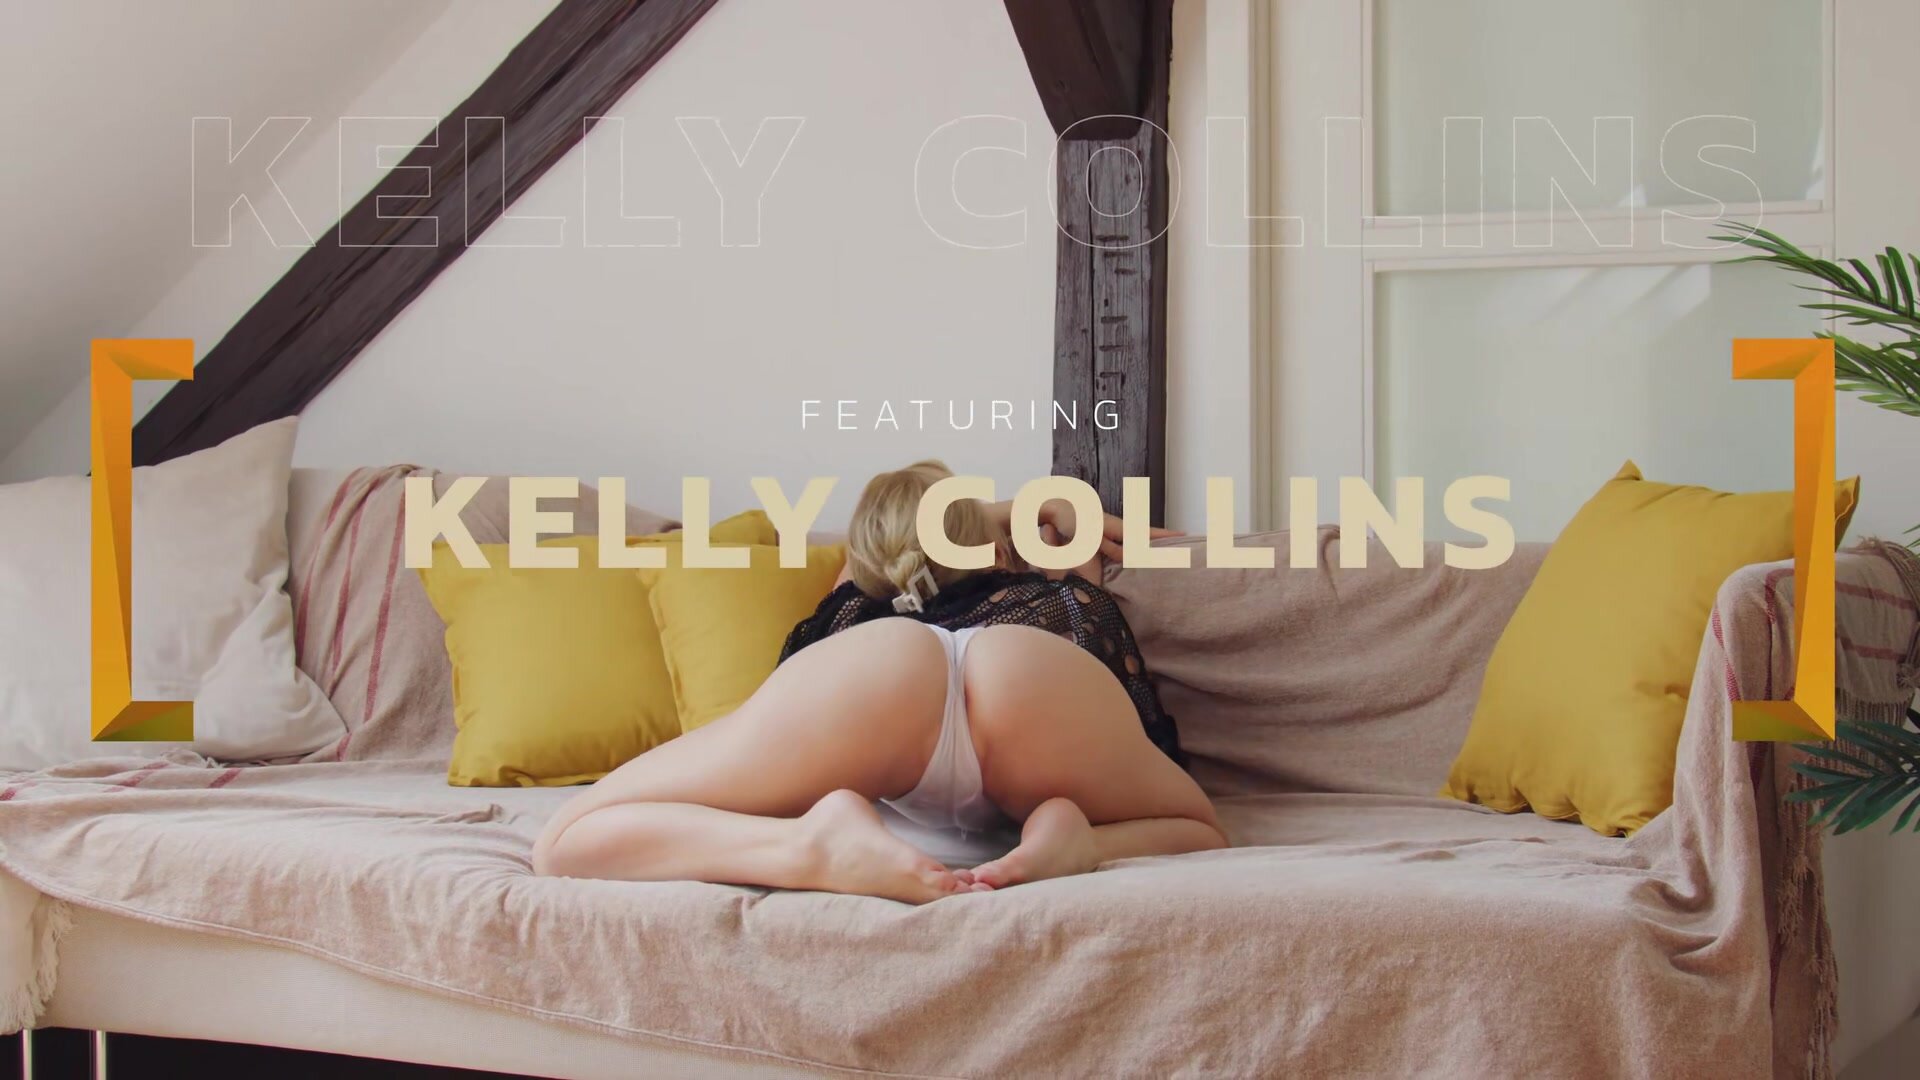 UltraFilms - Kelly Collins - Golden Femme